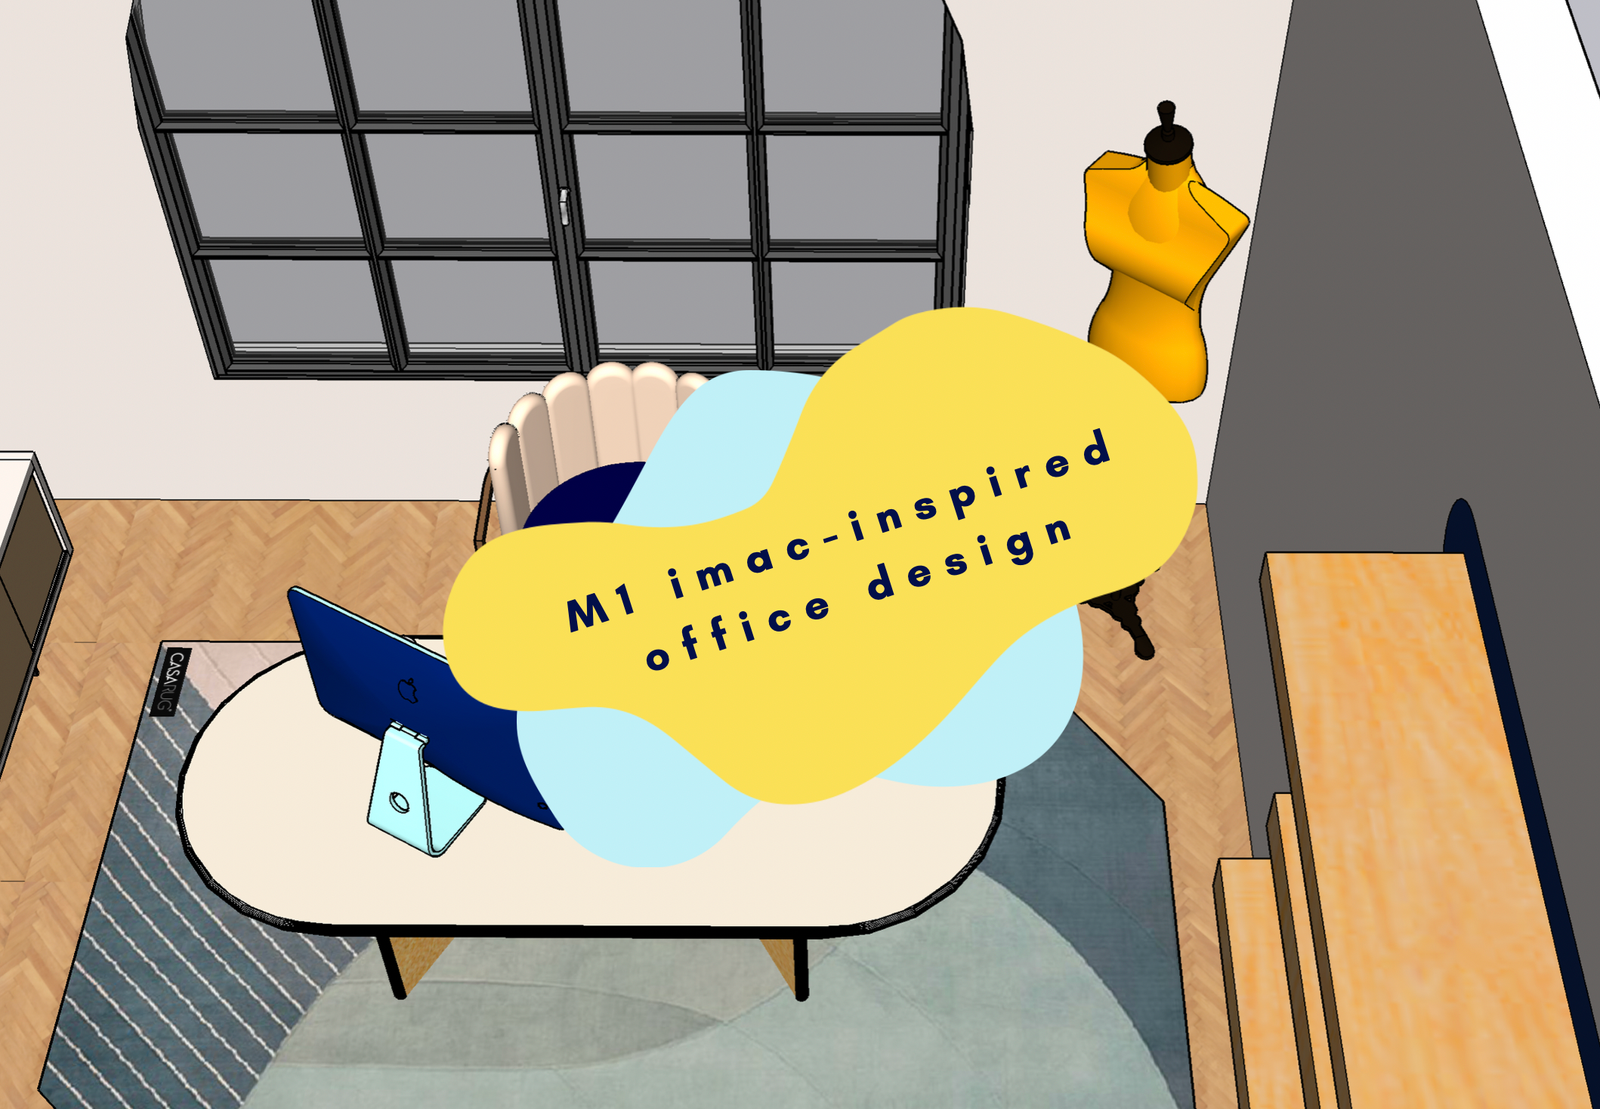 blue m1 iMac inspired office design - apple | homey homies